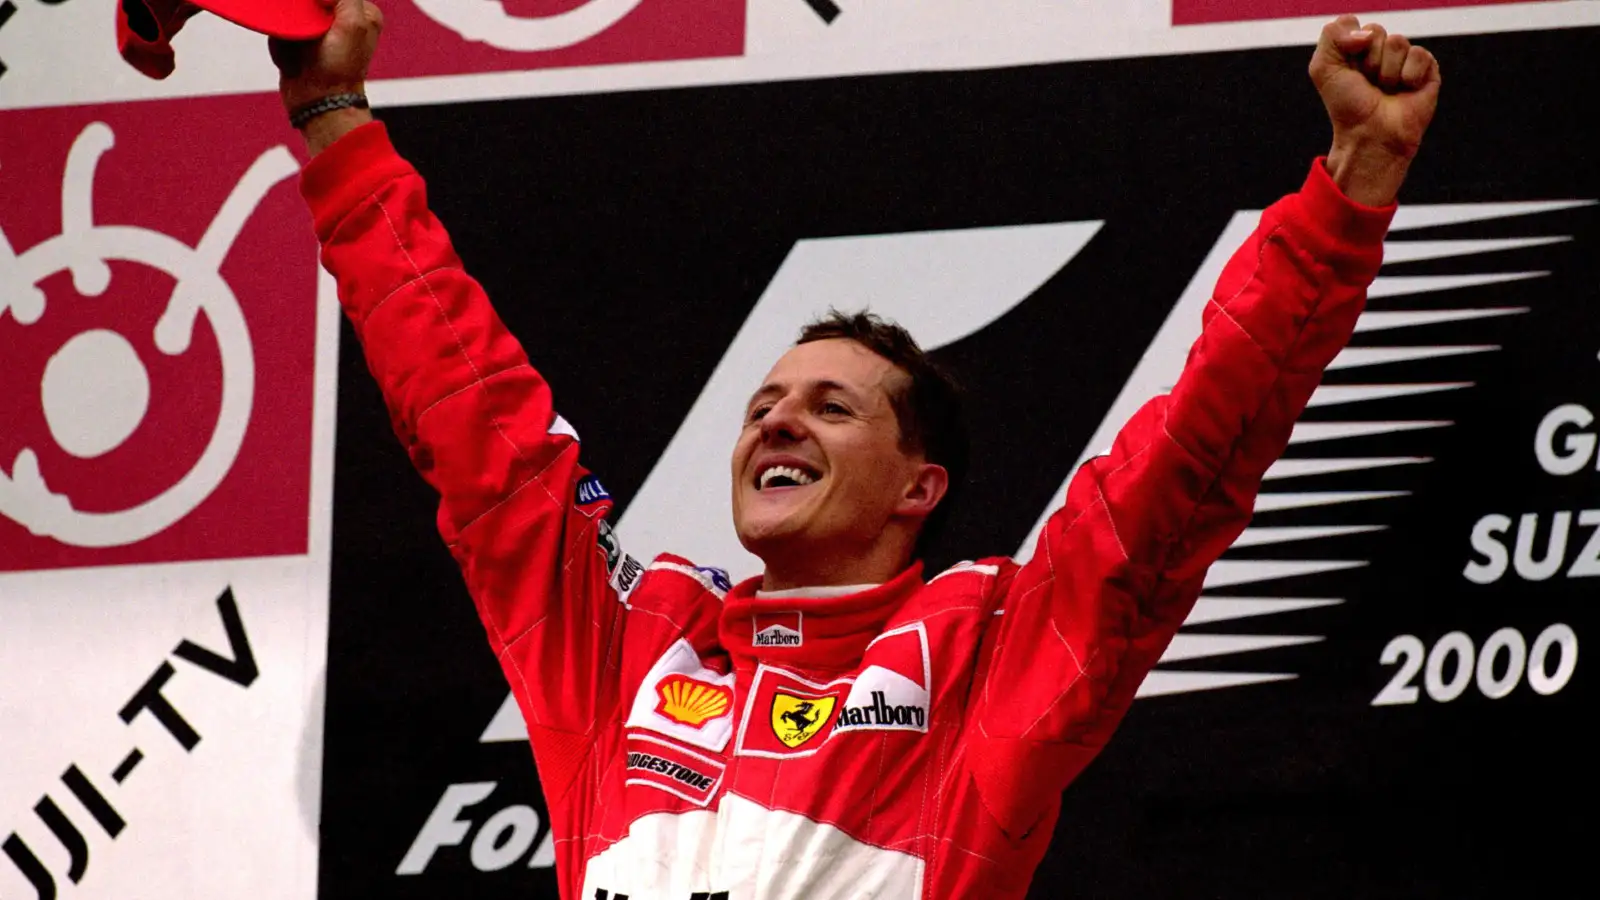 Michael Schumacher celebrates his title win at Suzuka in 2000.